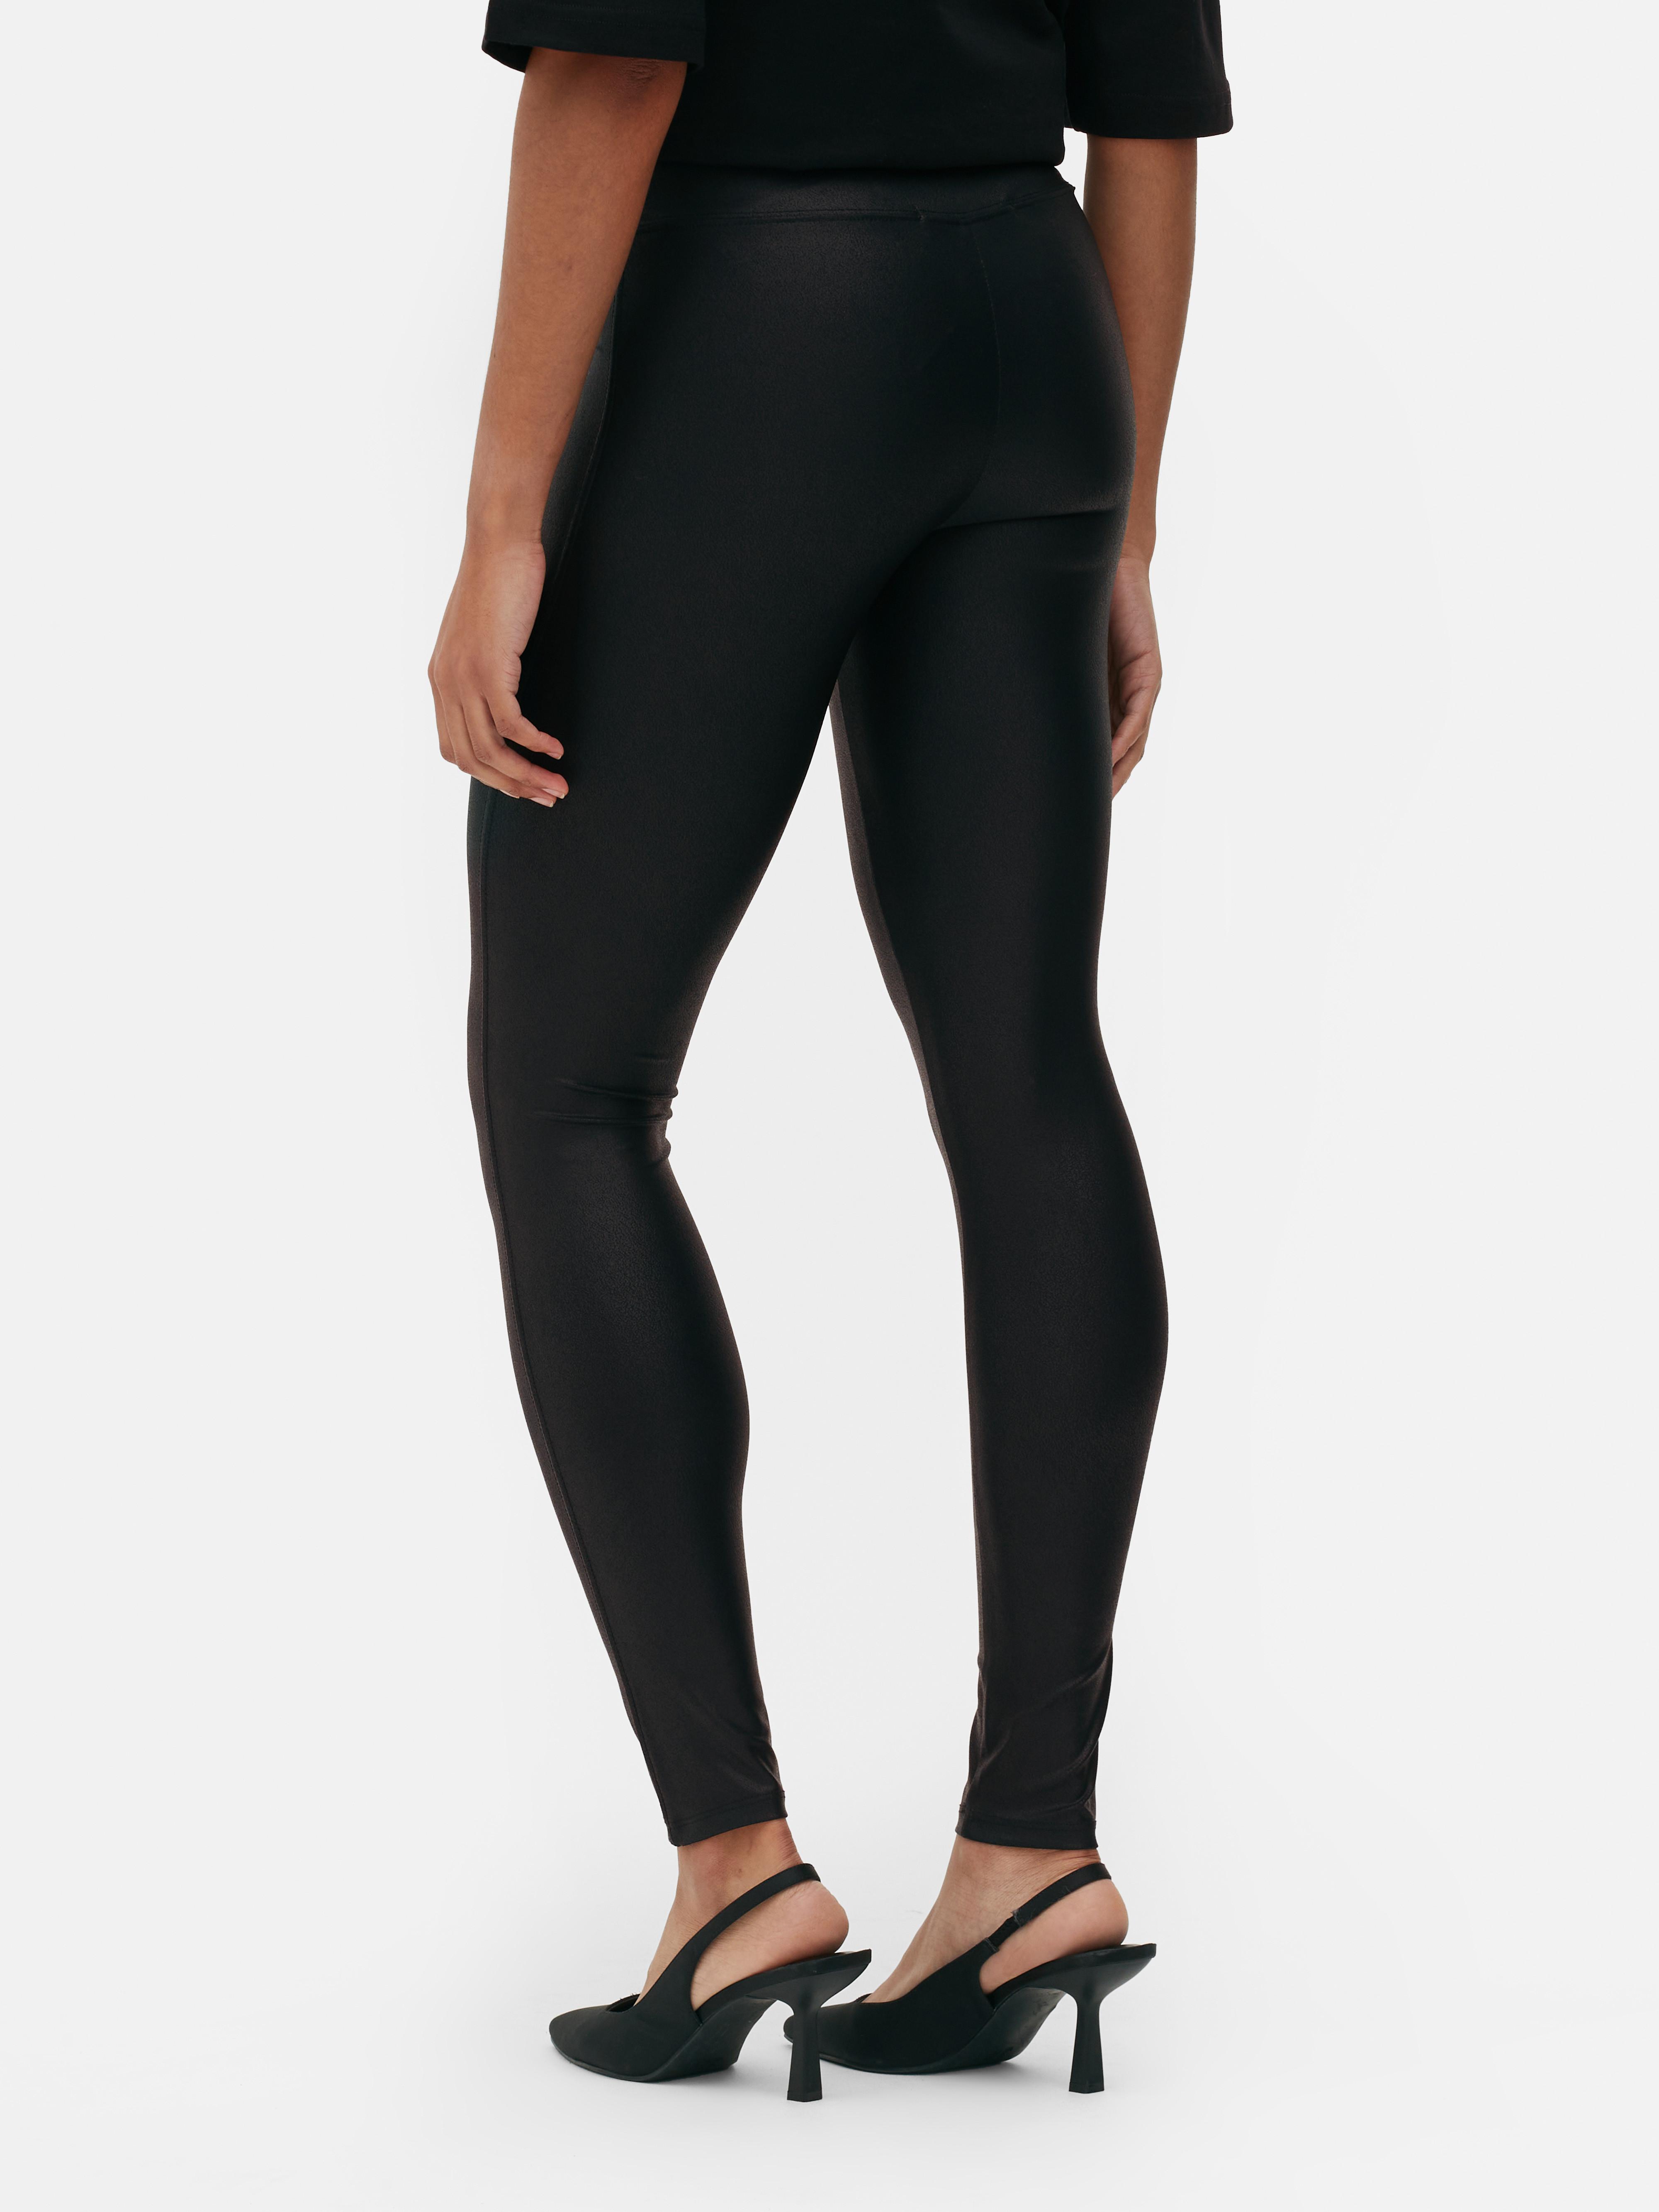 Shiny slick black #wetlook #leggings: Posing on the floor.